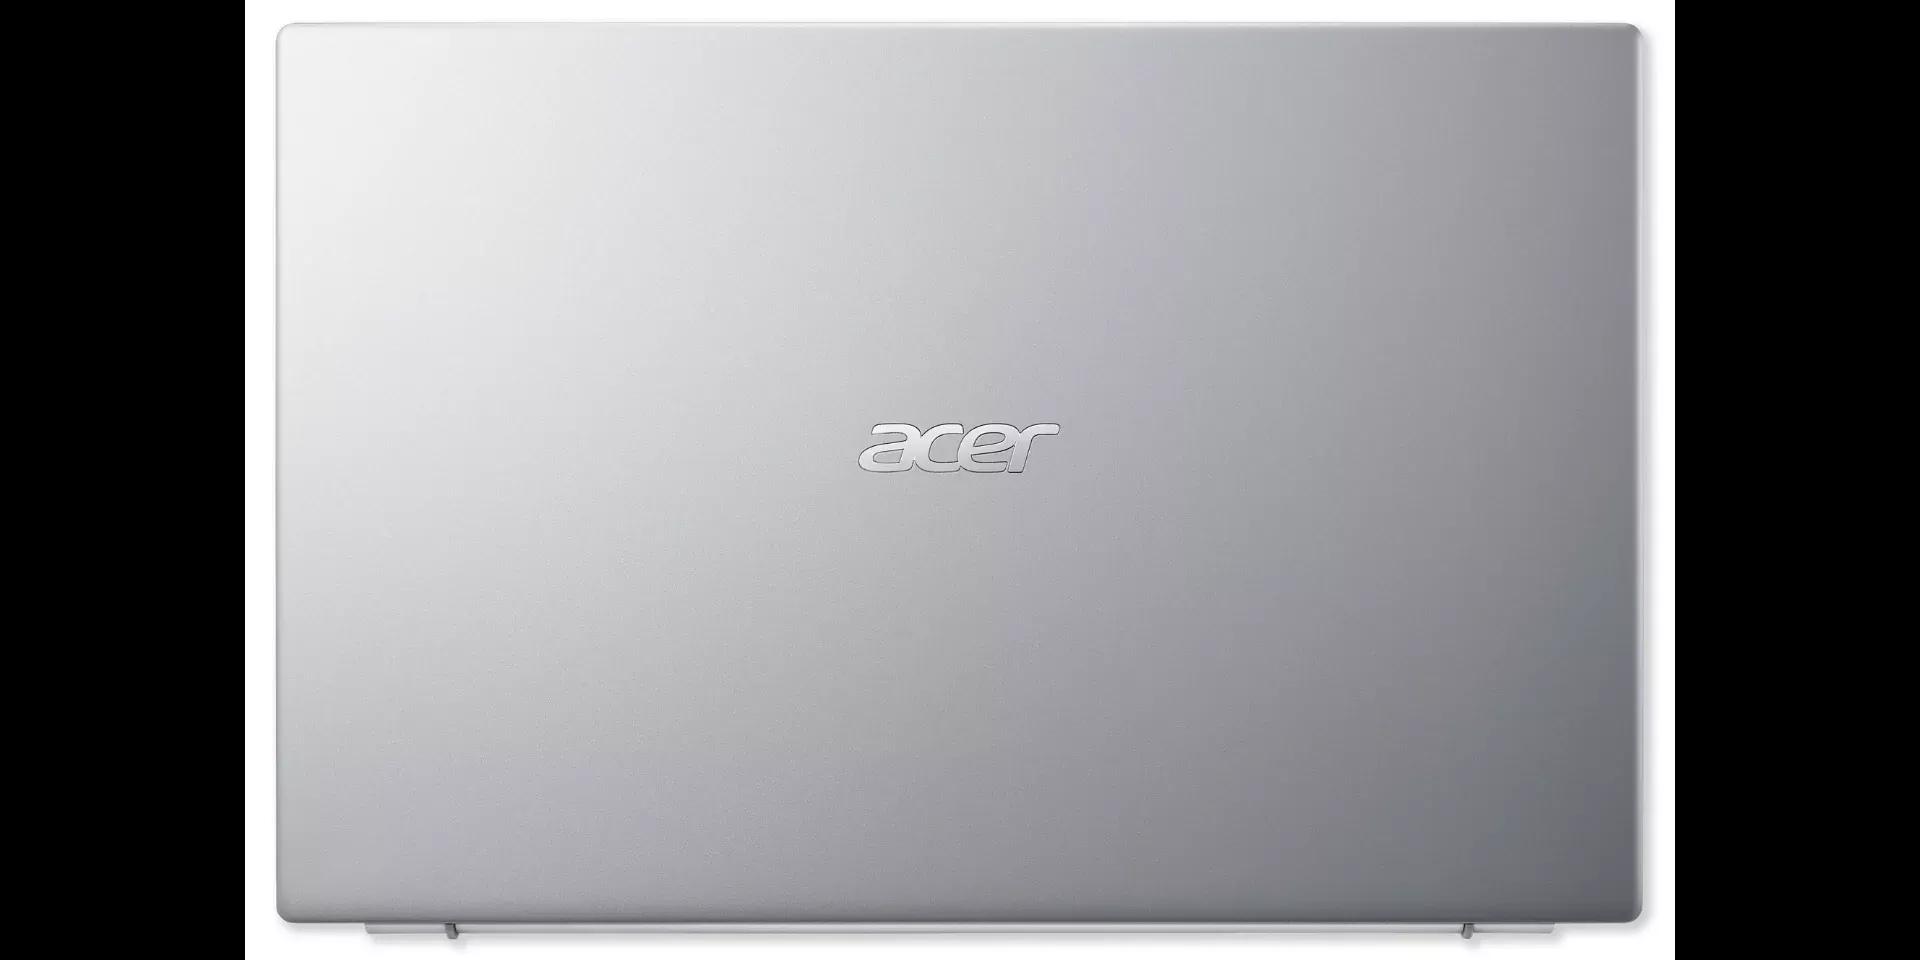 Acer Aspire 3 2021 i5 11Th Gen | 8GB RAM | 1TB HDD | 256GB SSD | NVIDIA MX350 2GB | 15.6" FHD Display